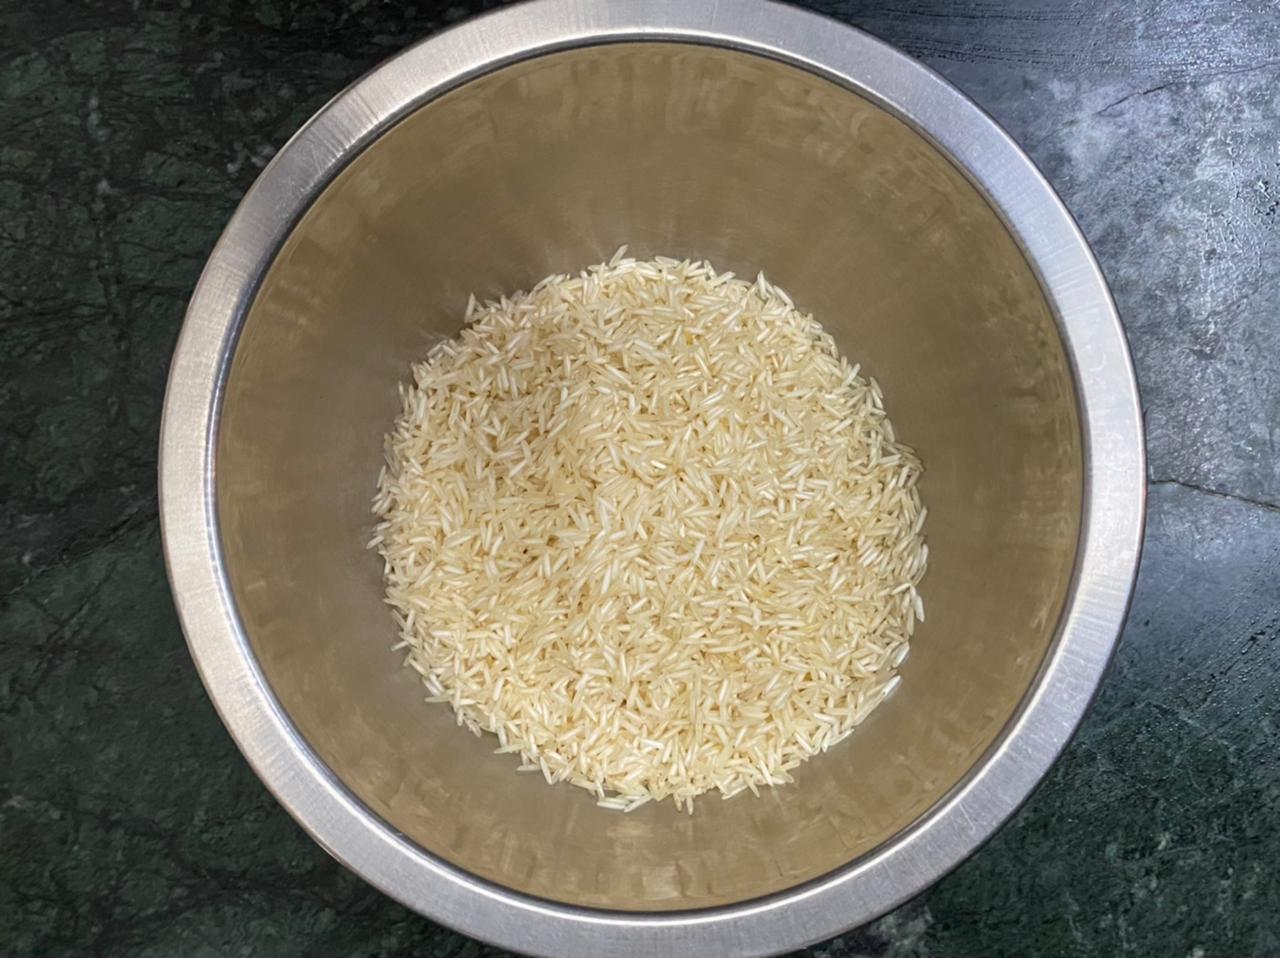 Spinach Rice Recipe